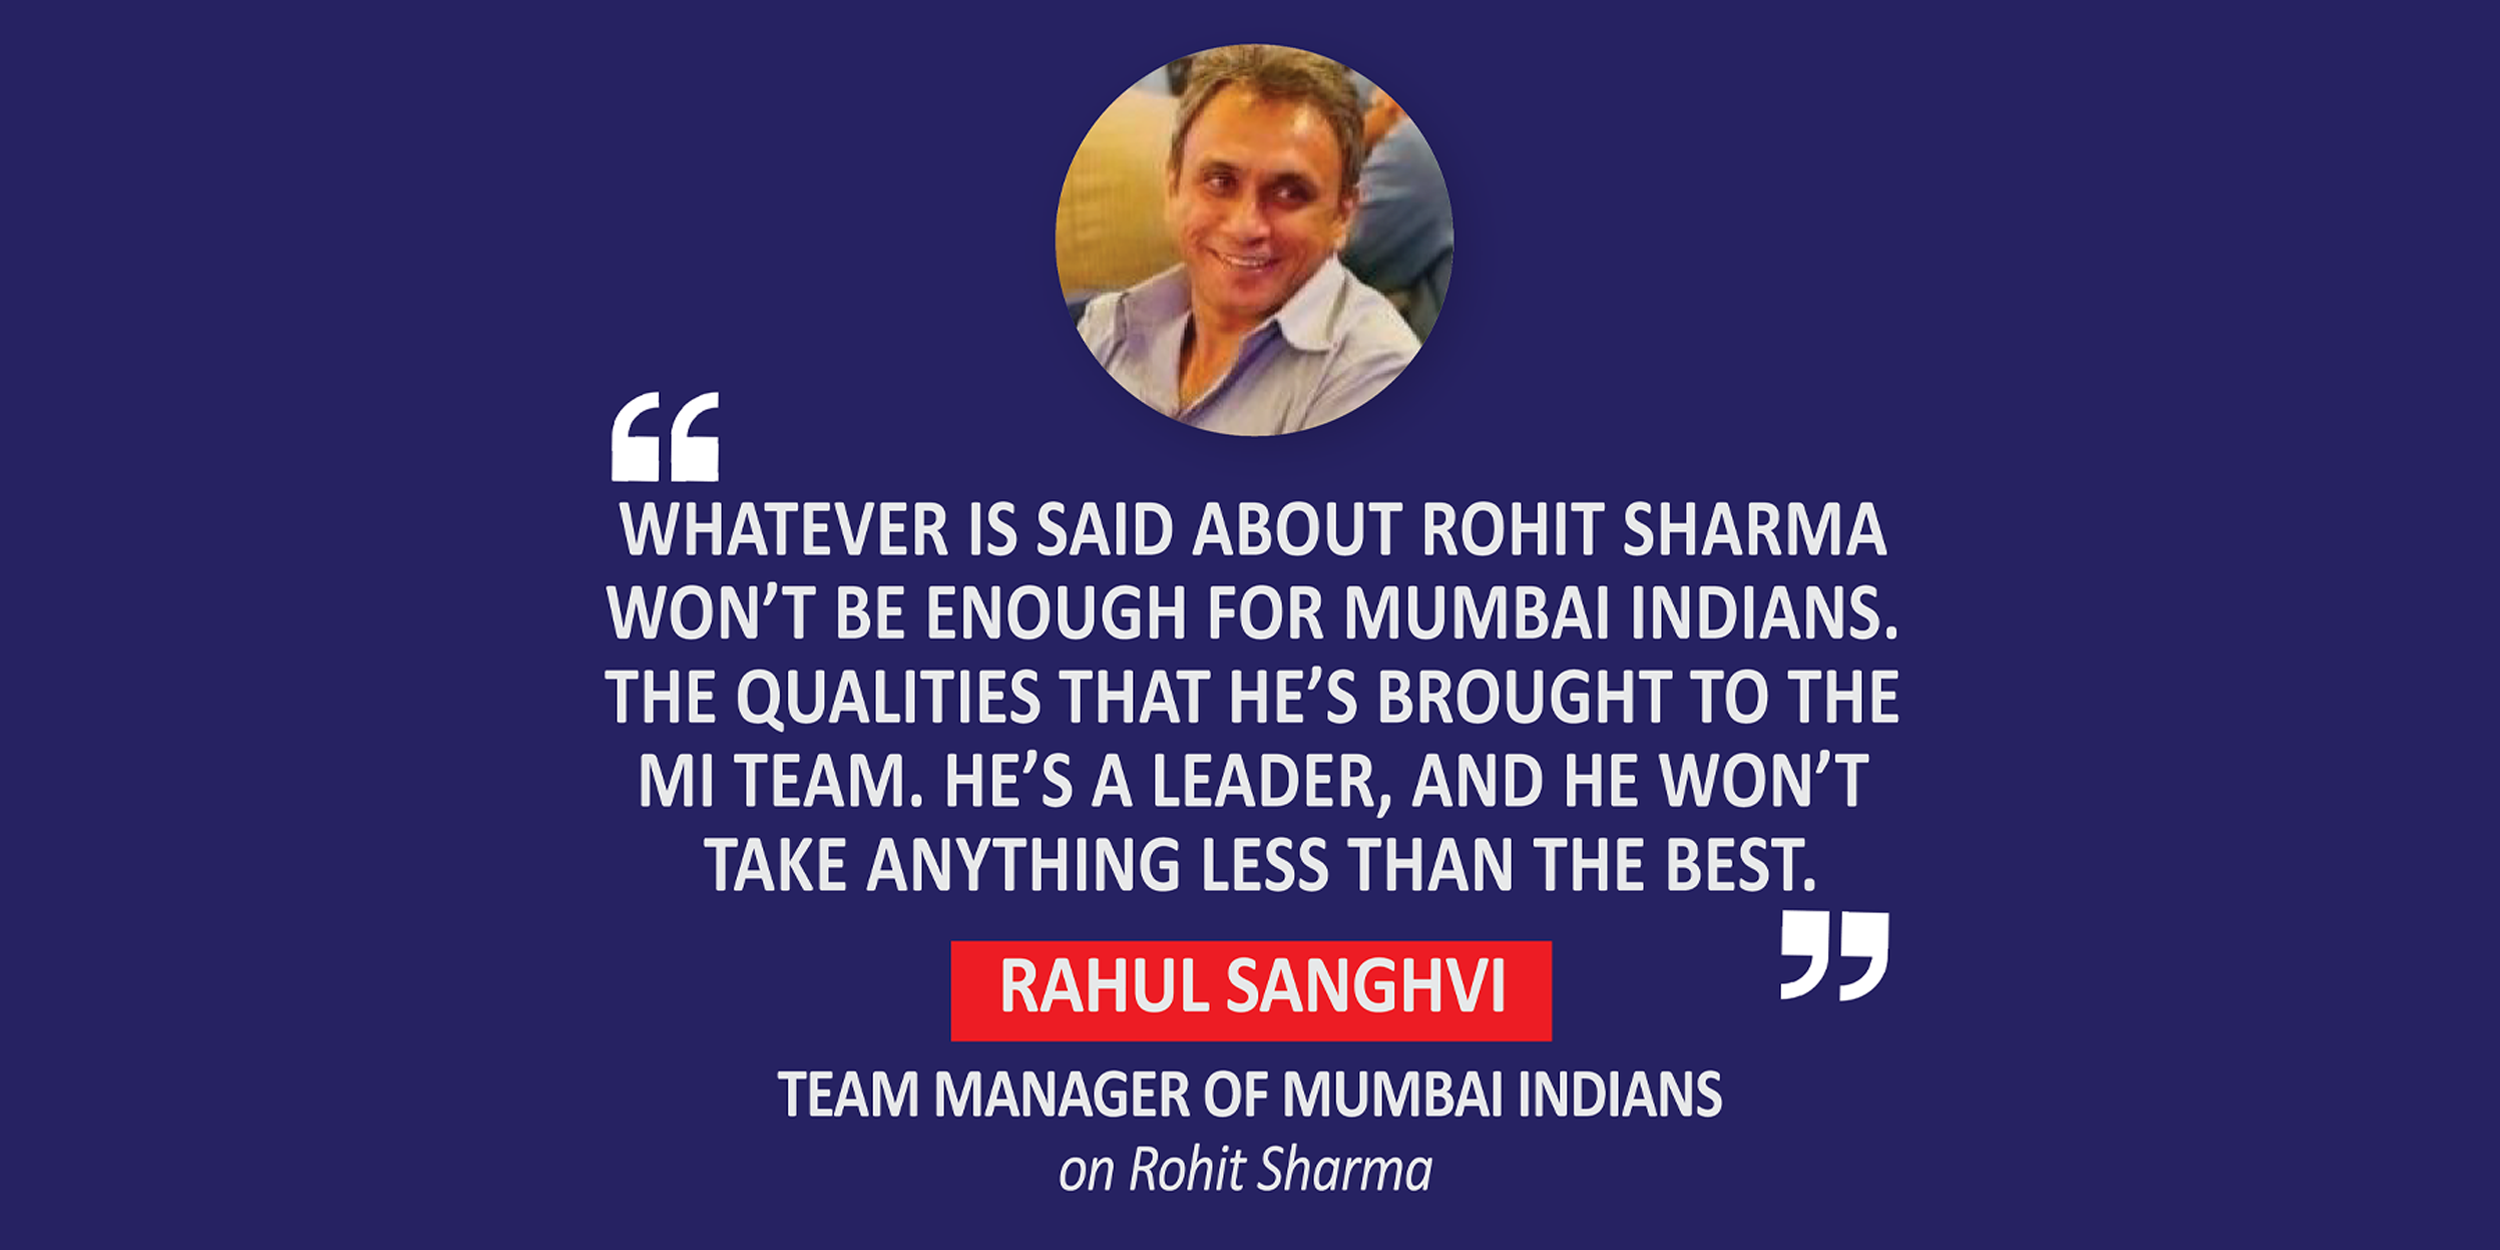 Rahul Sanghvi, Team Manager of Mumbai Indians on Rohit Sharma